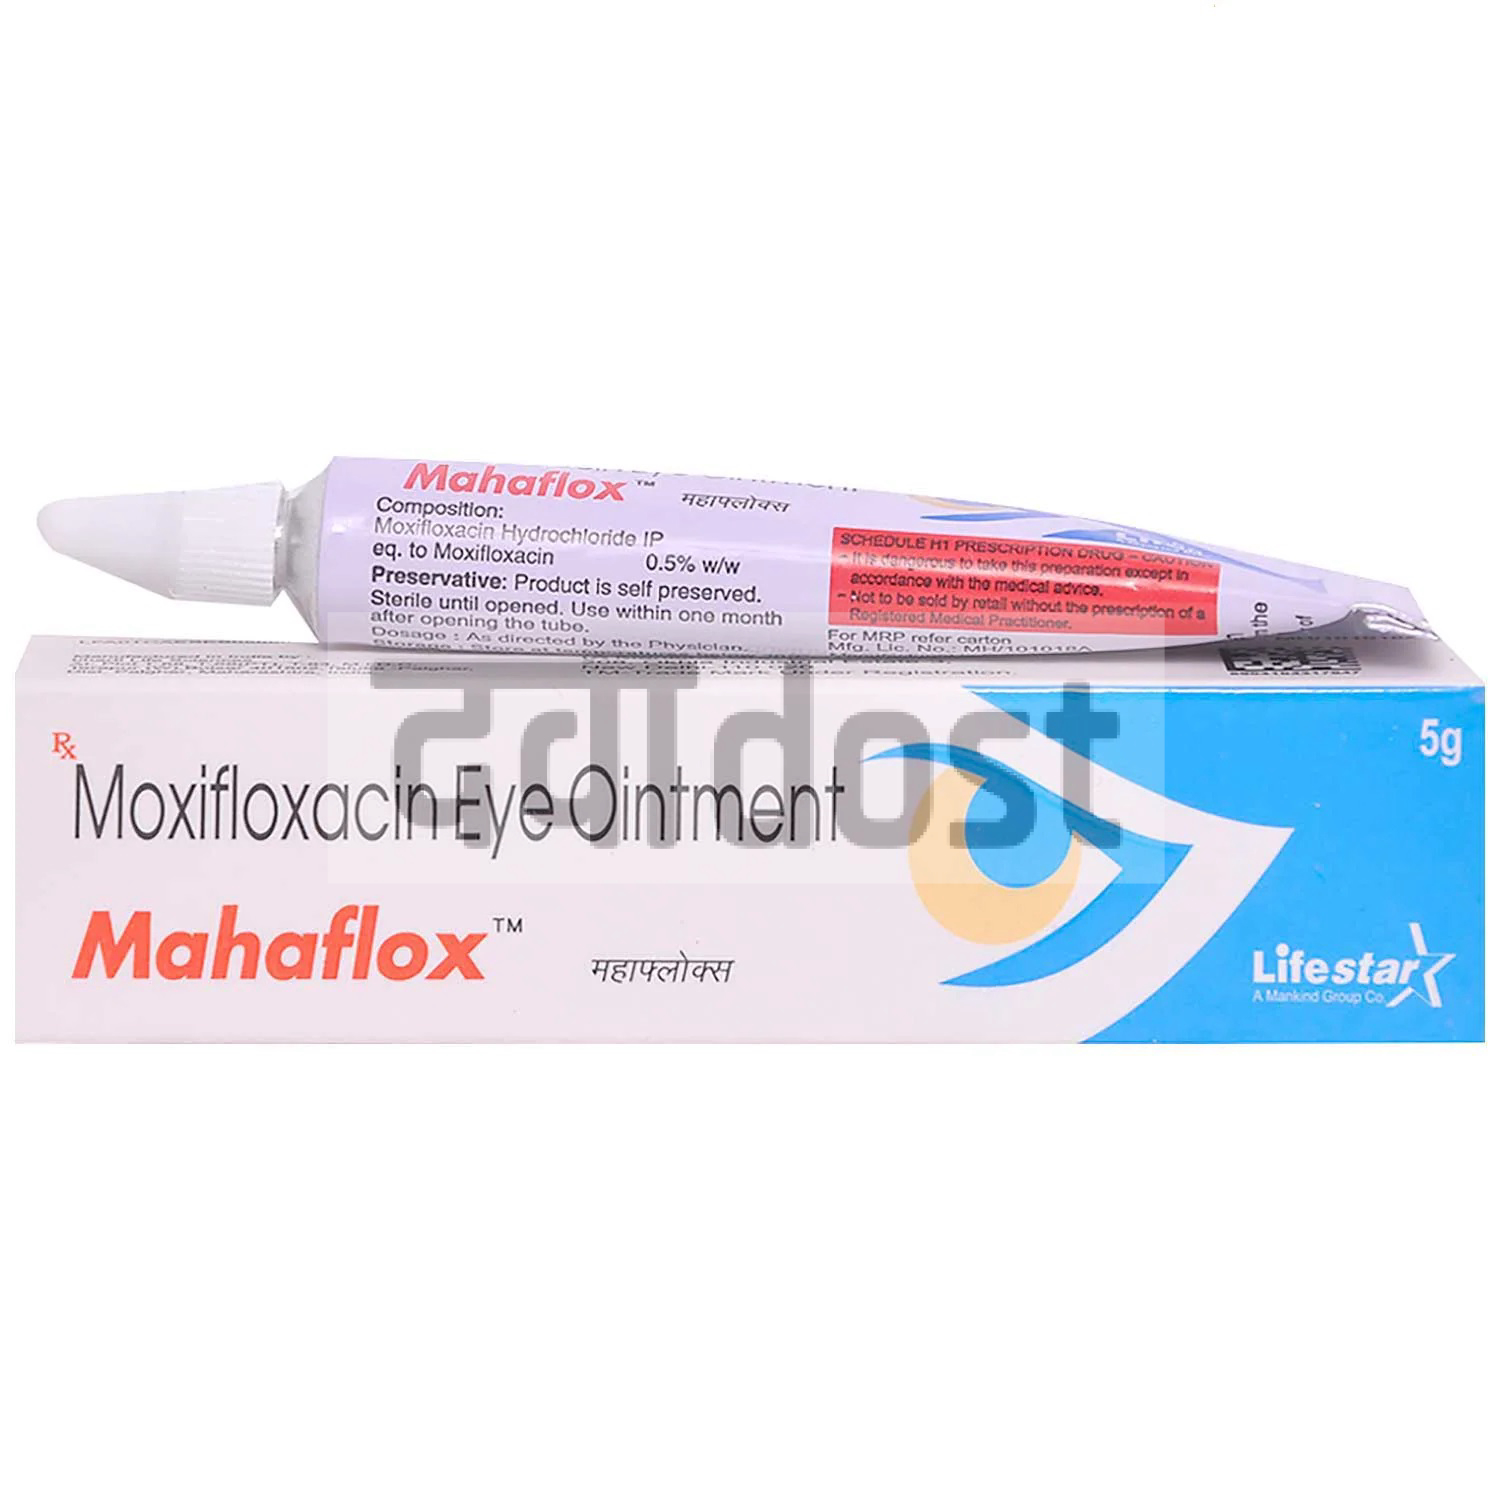 Mahaflox Eye Ointment